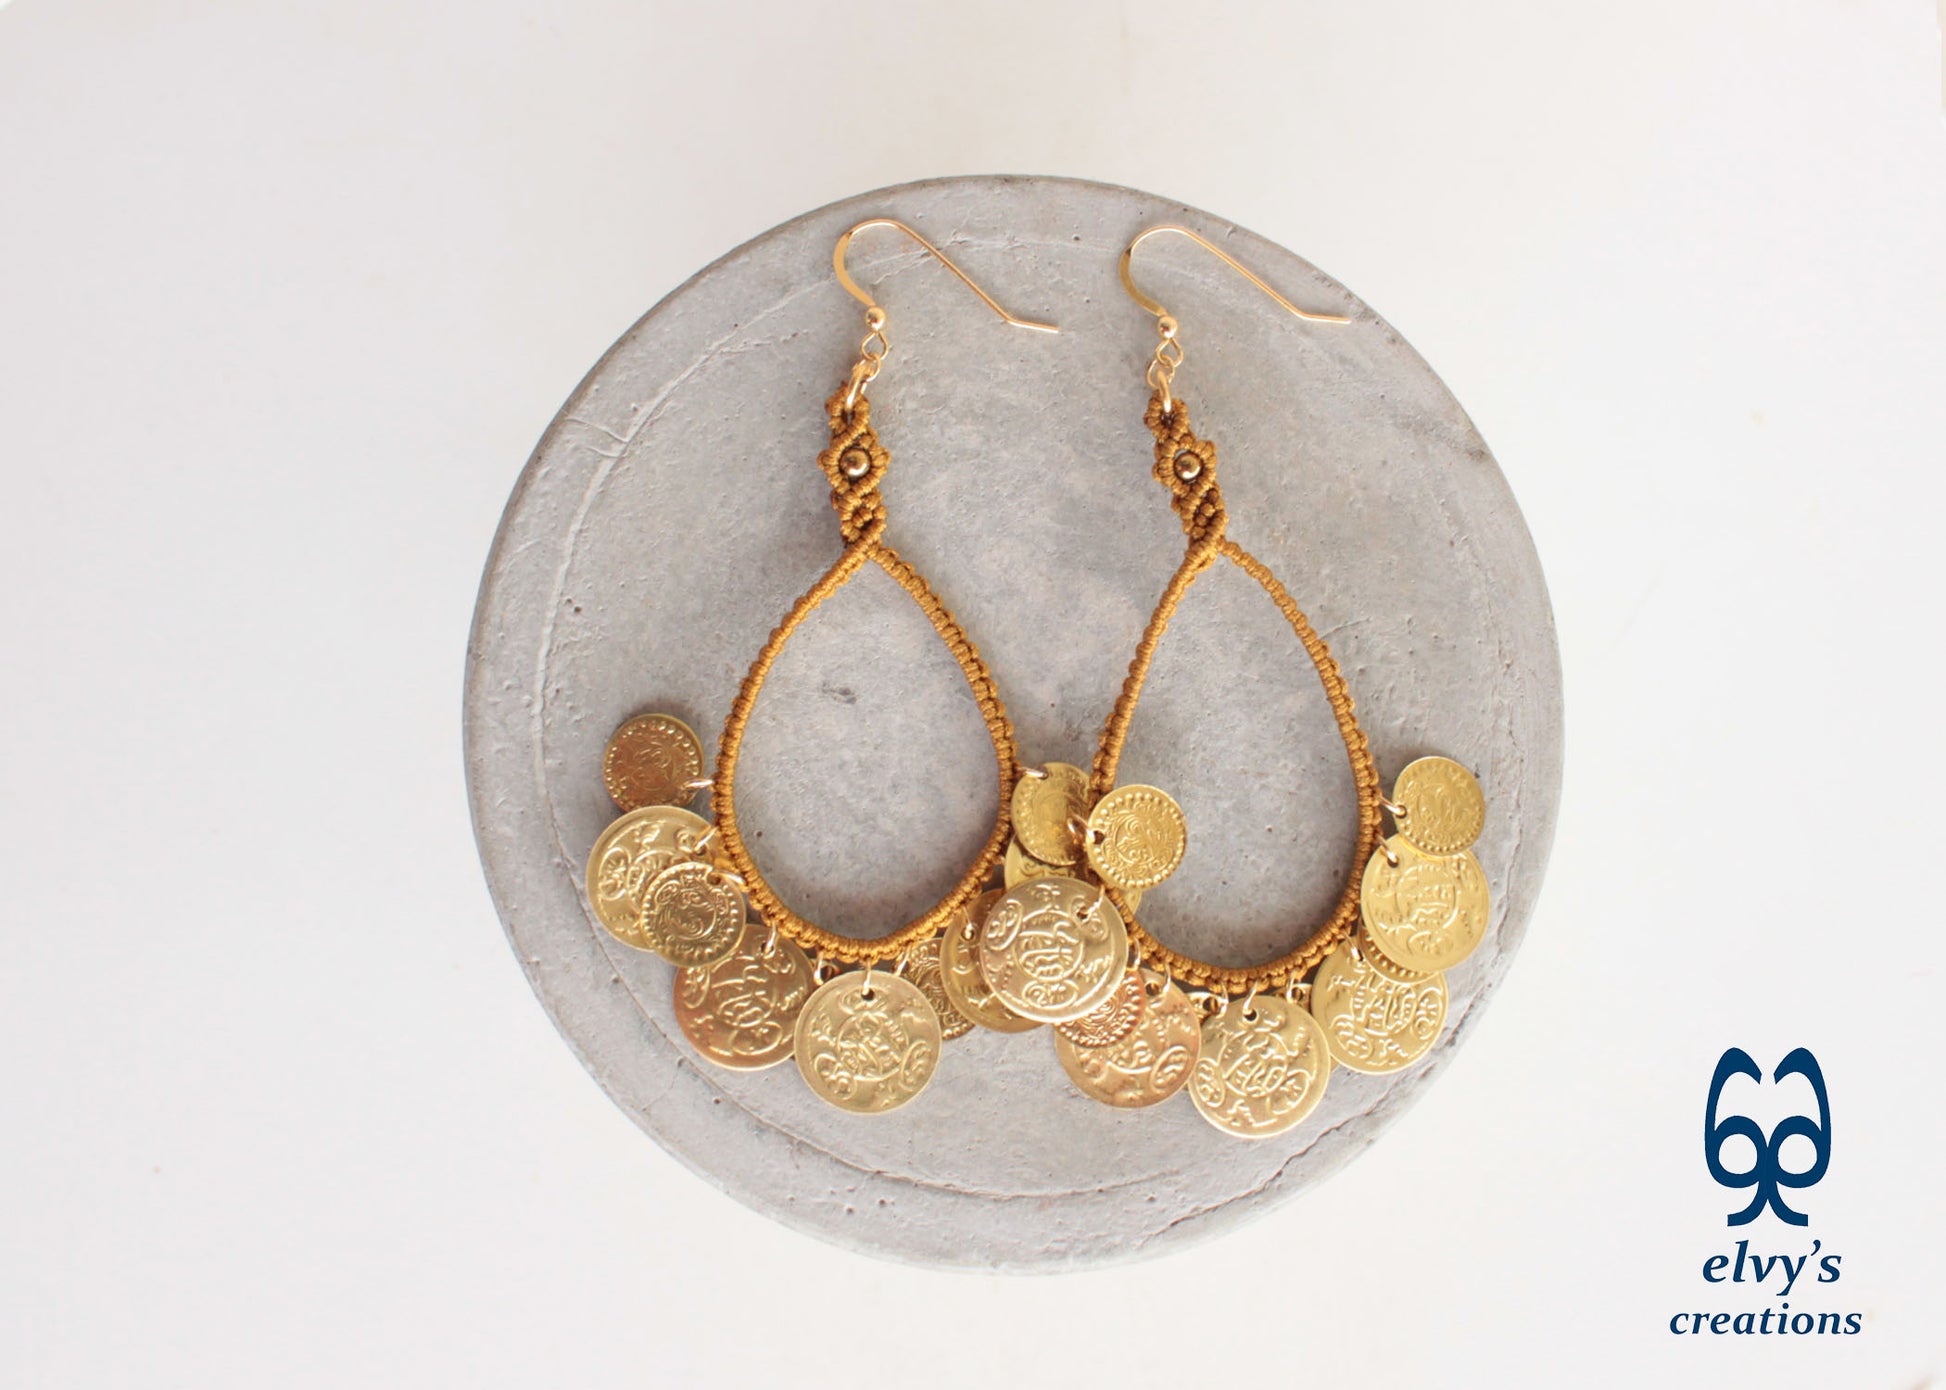 Gold Handmade Macrame Earrings Long Dangle with Amethyst Gemstones, Χρυσά Μακραμέ Σκουλαρίκια με Φλουριά